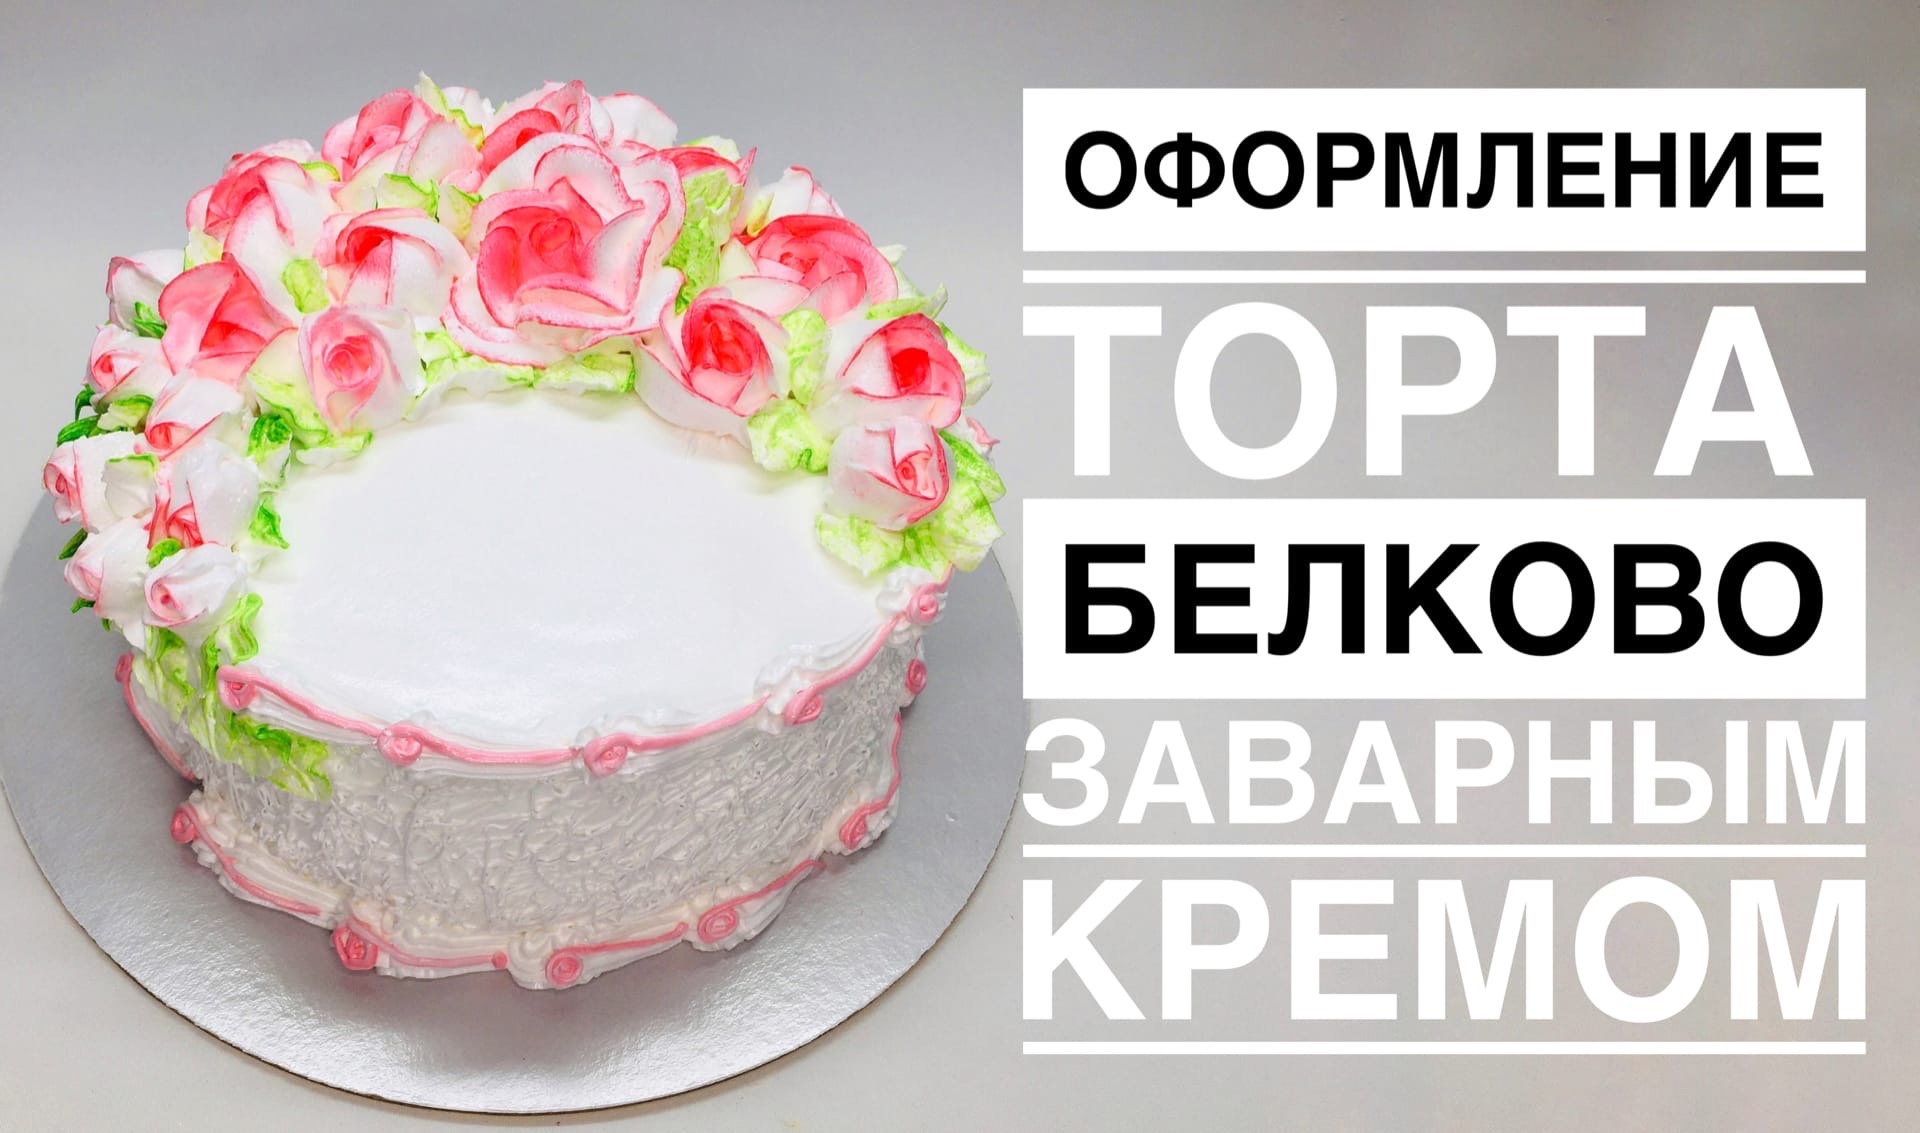 Оформление торта розами из крема_How to make cake with roses made of cream.